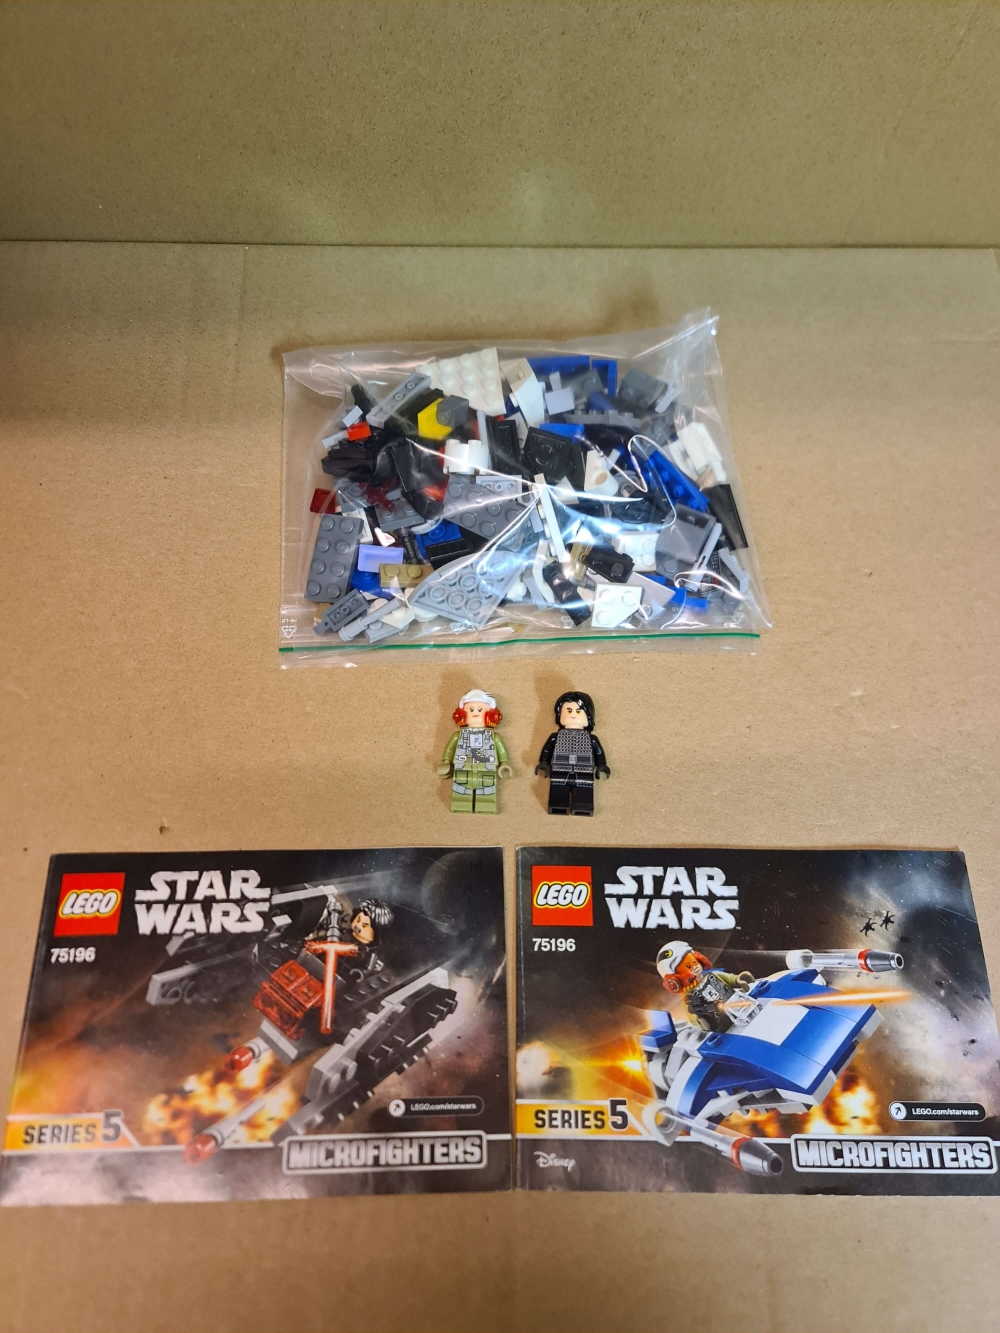 Sett 75196 fra Lego Star Wars : Microfighters Series 5 : Star Wars Episode 8 serien.
Meget pent. 
Komplett med manualer.